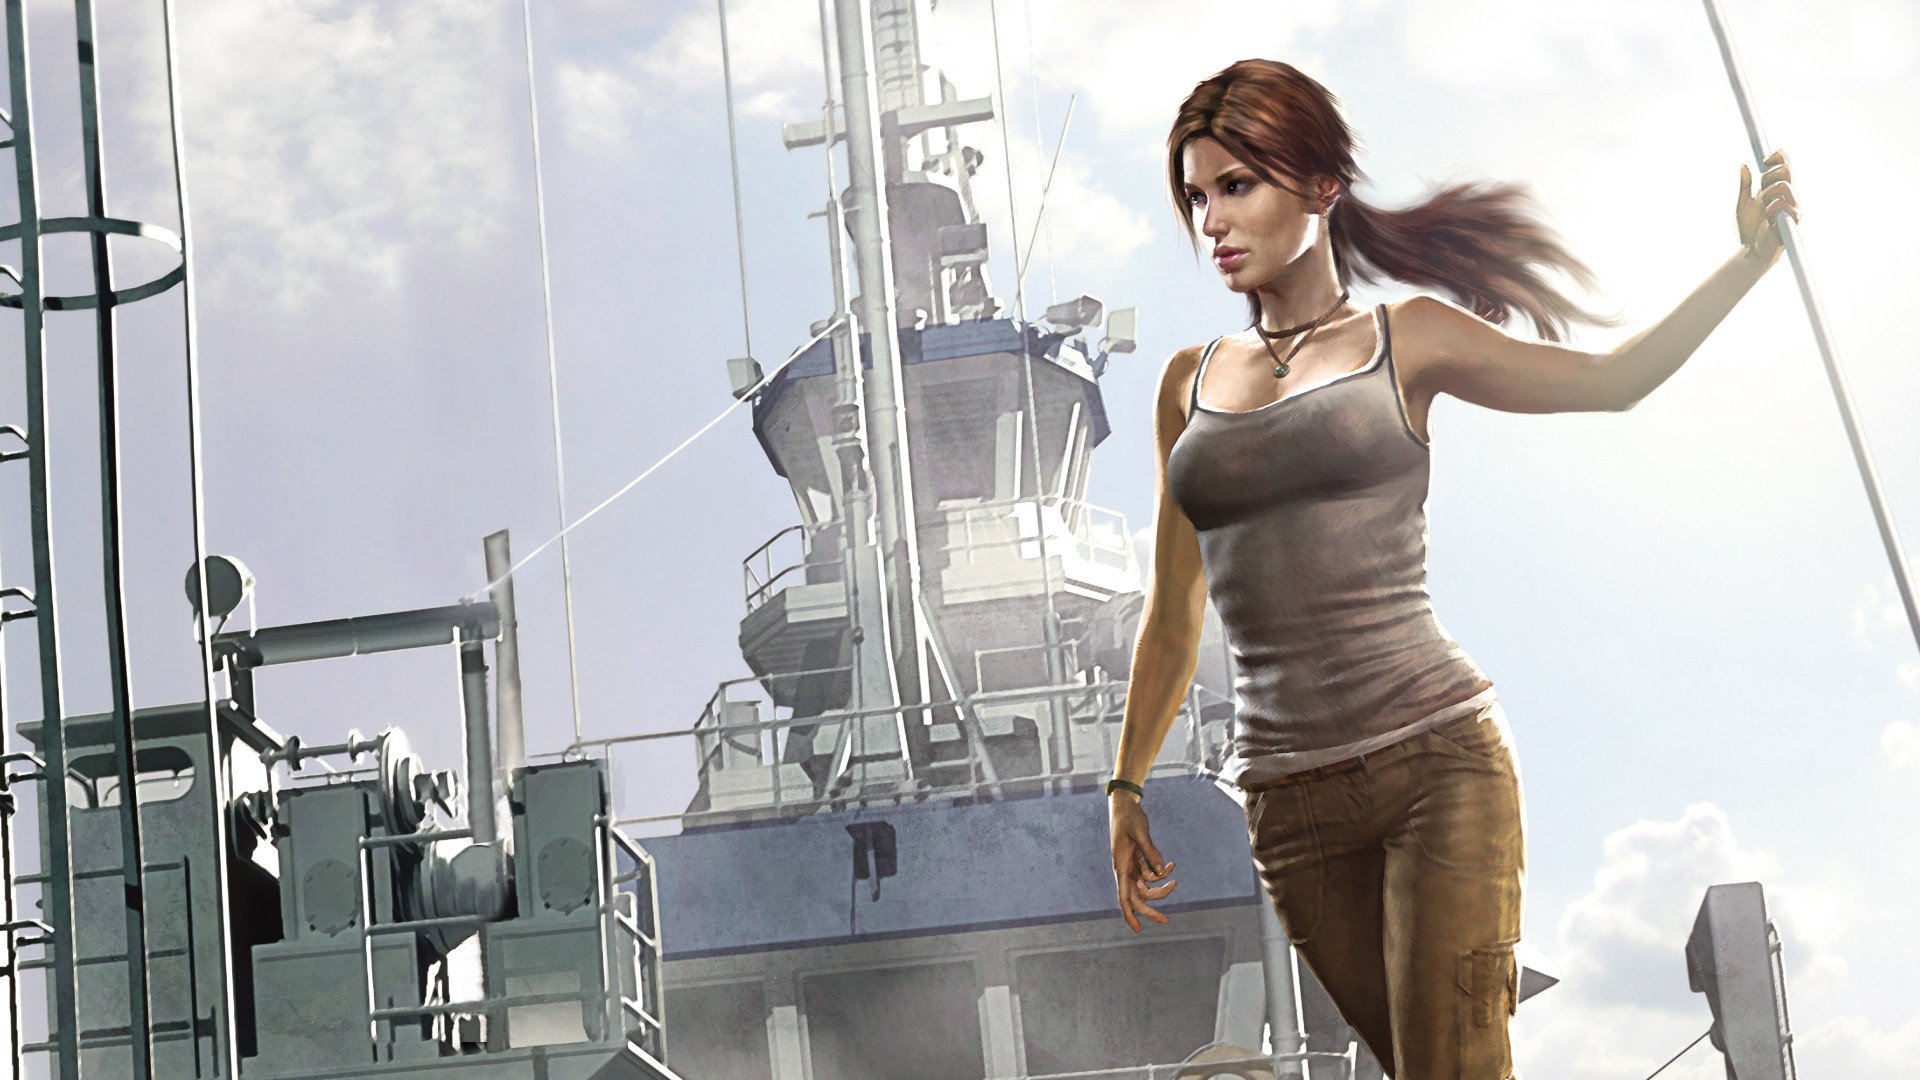 Best Tomb Raider (Lara Croft) wallpaper ID:437079 for High Resolution full hd 1080p PC